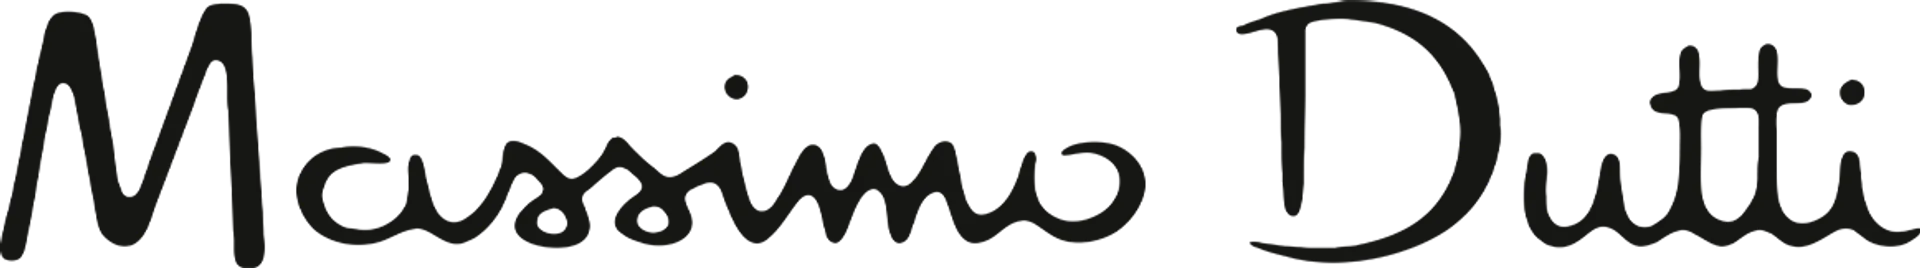 MASSIMO DUTTI logo die aktuell Flugblatt